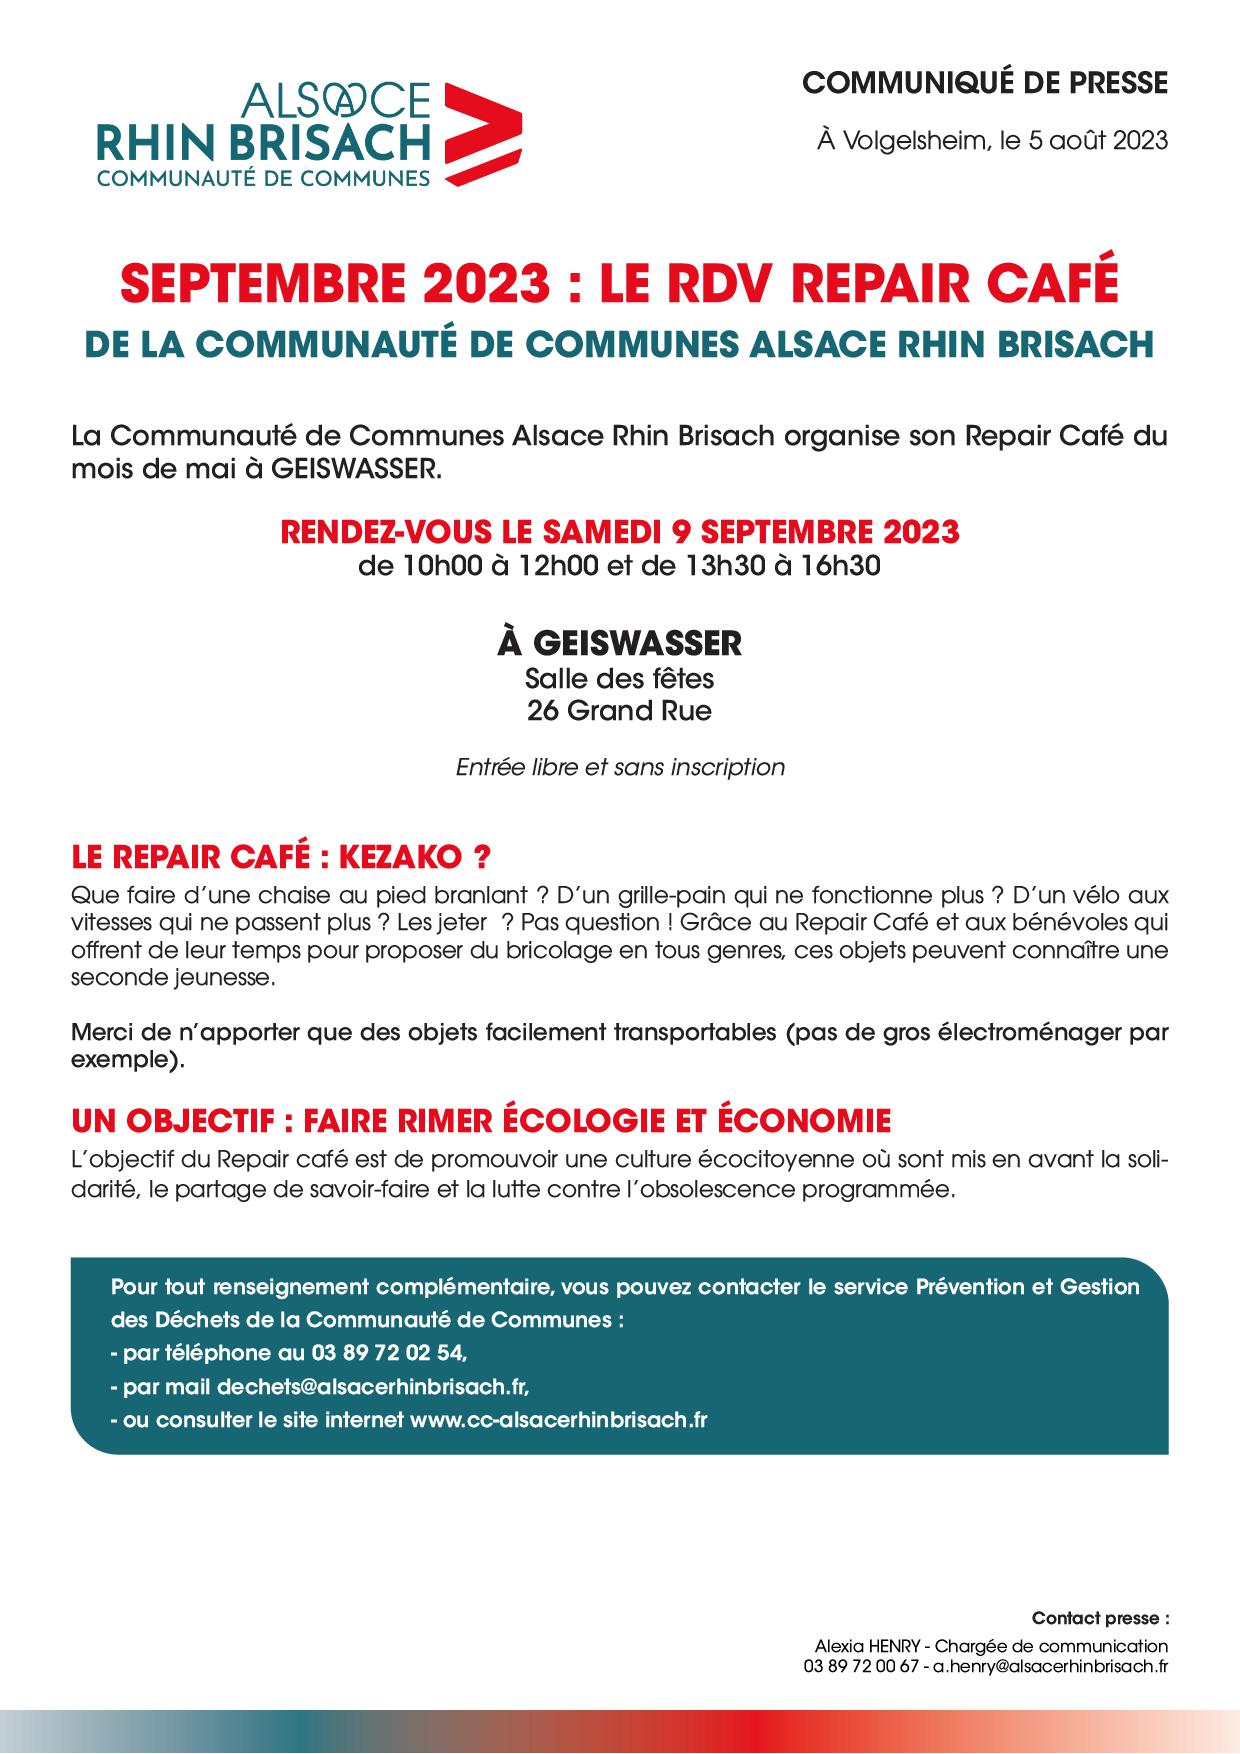 CCARB - Repair Café - 09.09.2023